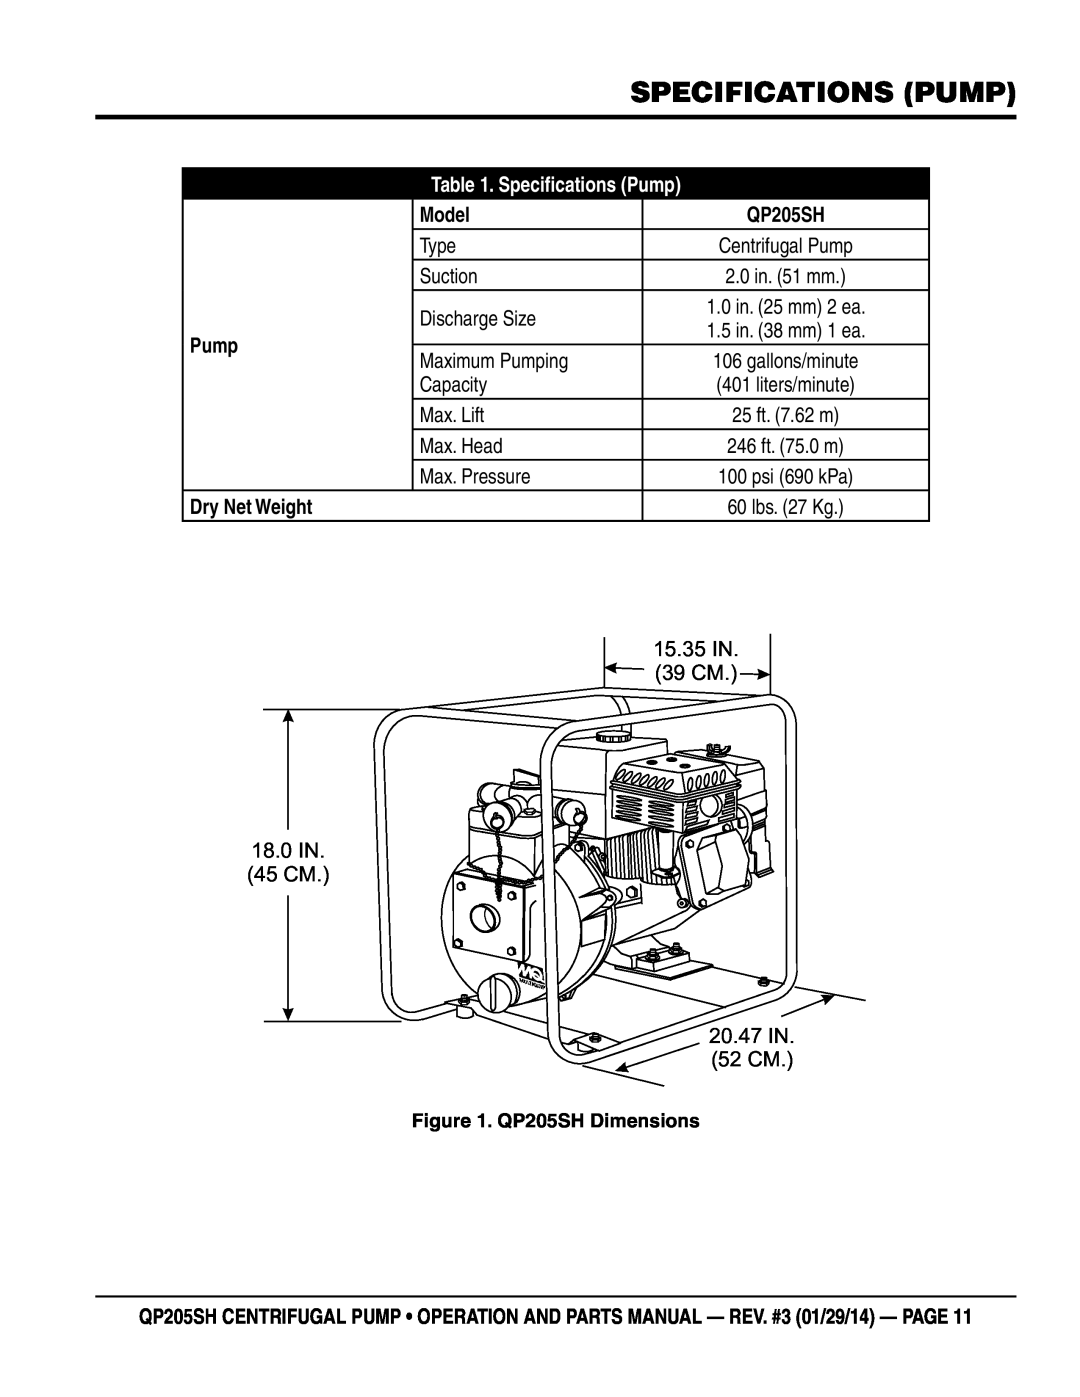 Honda Power Equipment QP205SH Specifications Pump, Model, Dry Net Weight, 15.35 IN 39 CM 18.0 IN 45 CM 20.47 IN 52 CM 